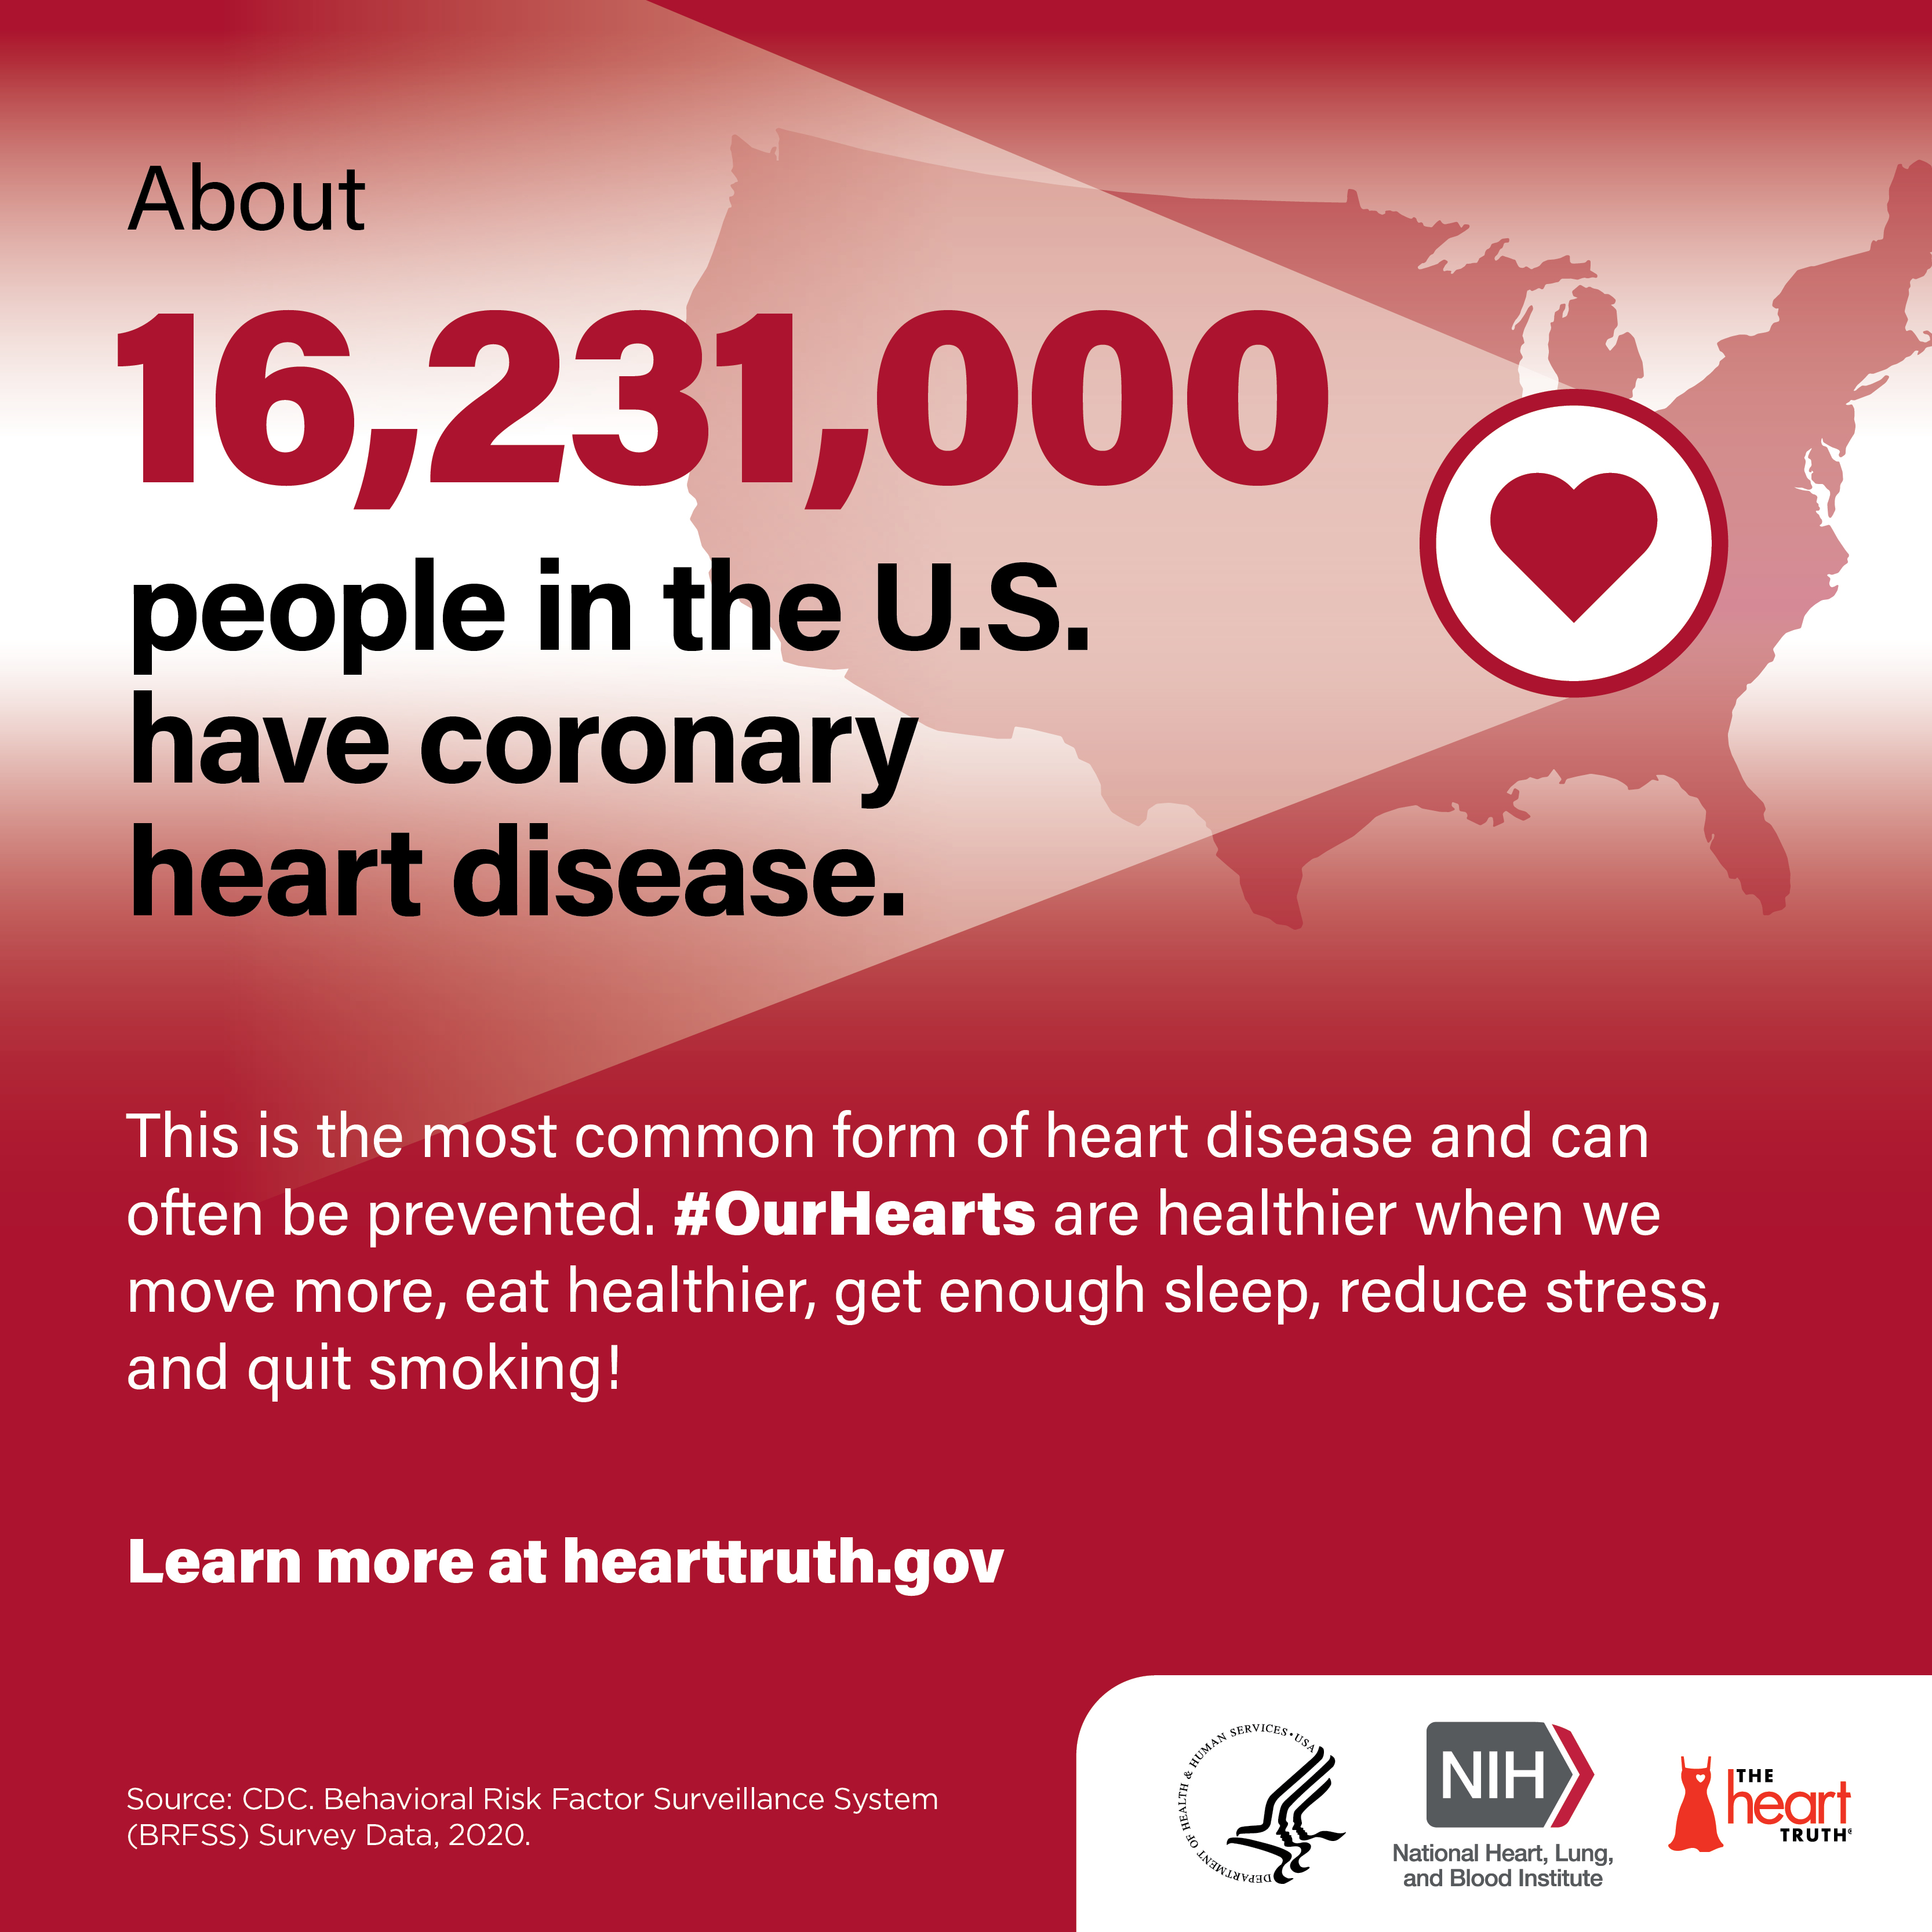 16,231,000 people in the U.S. have coronary heart disease